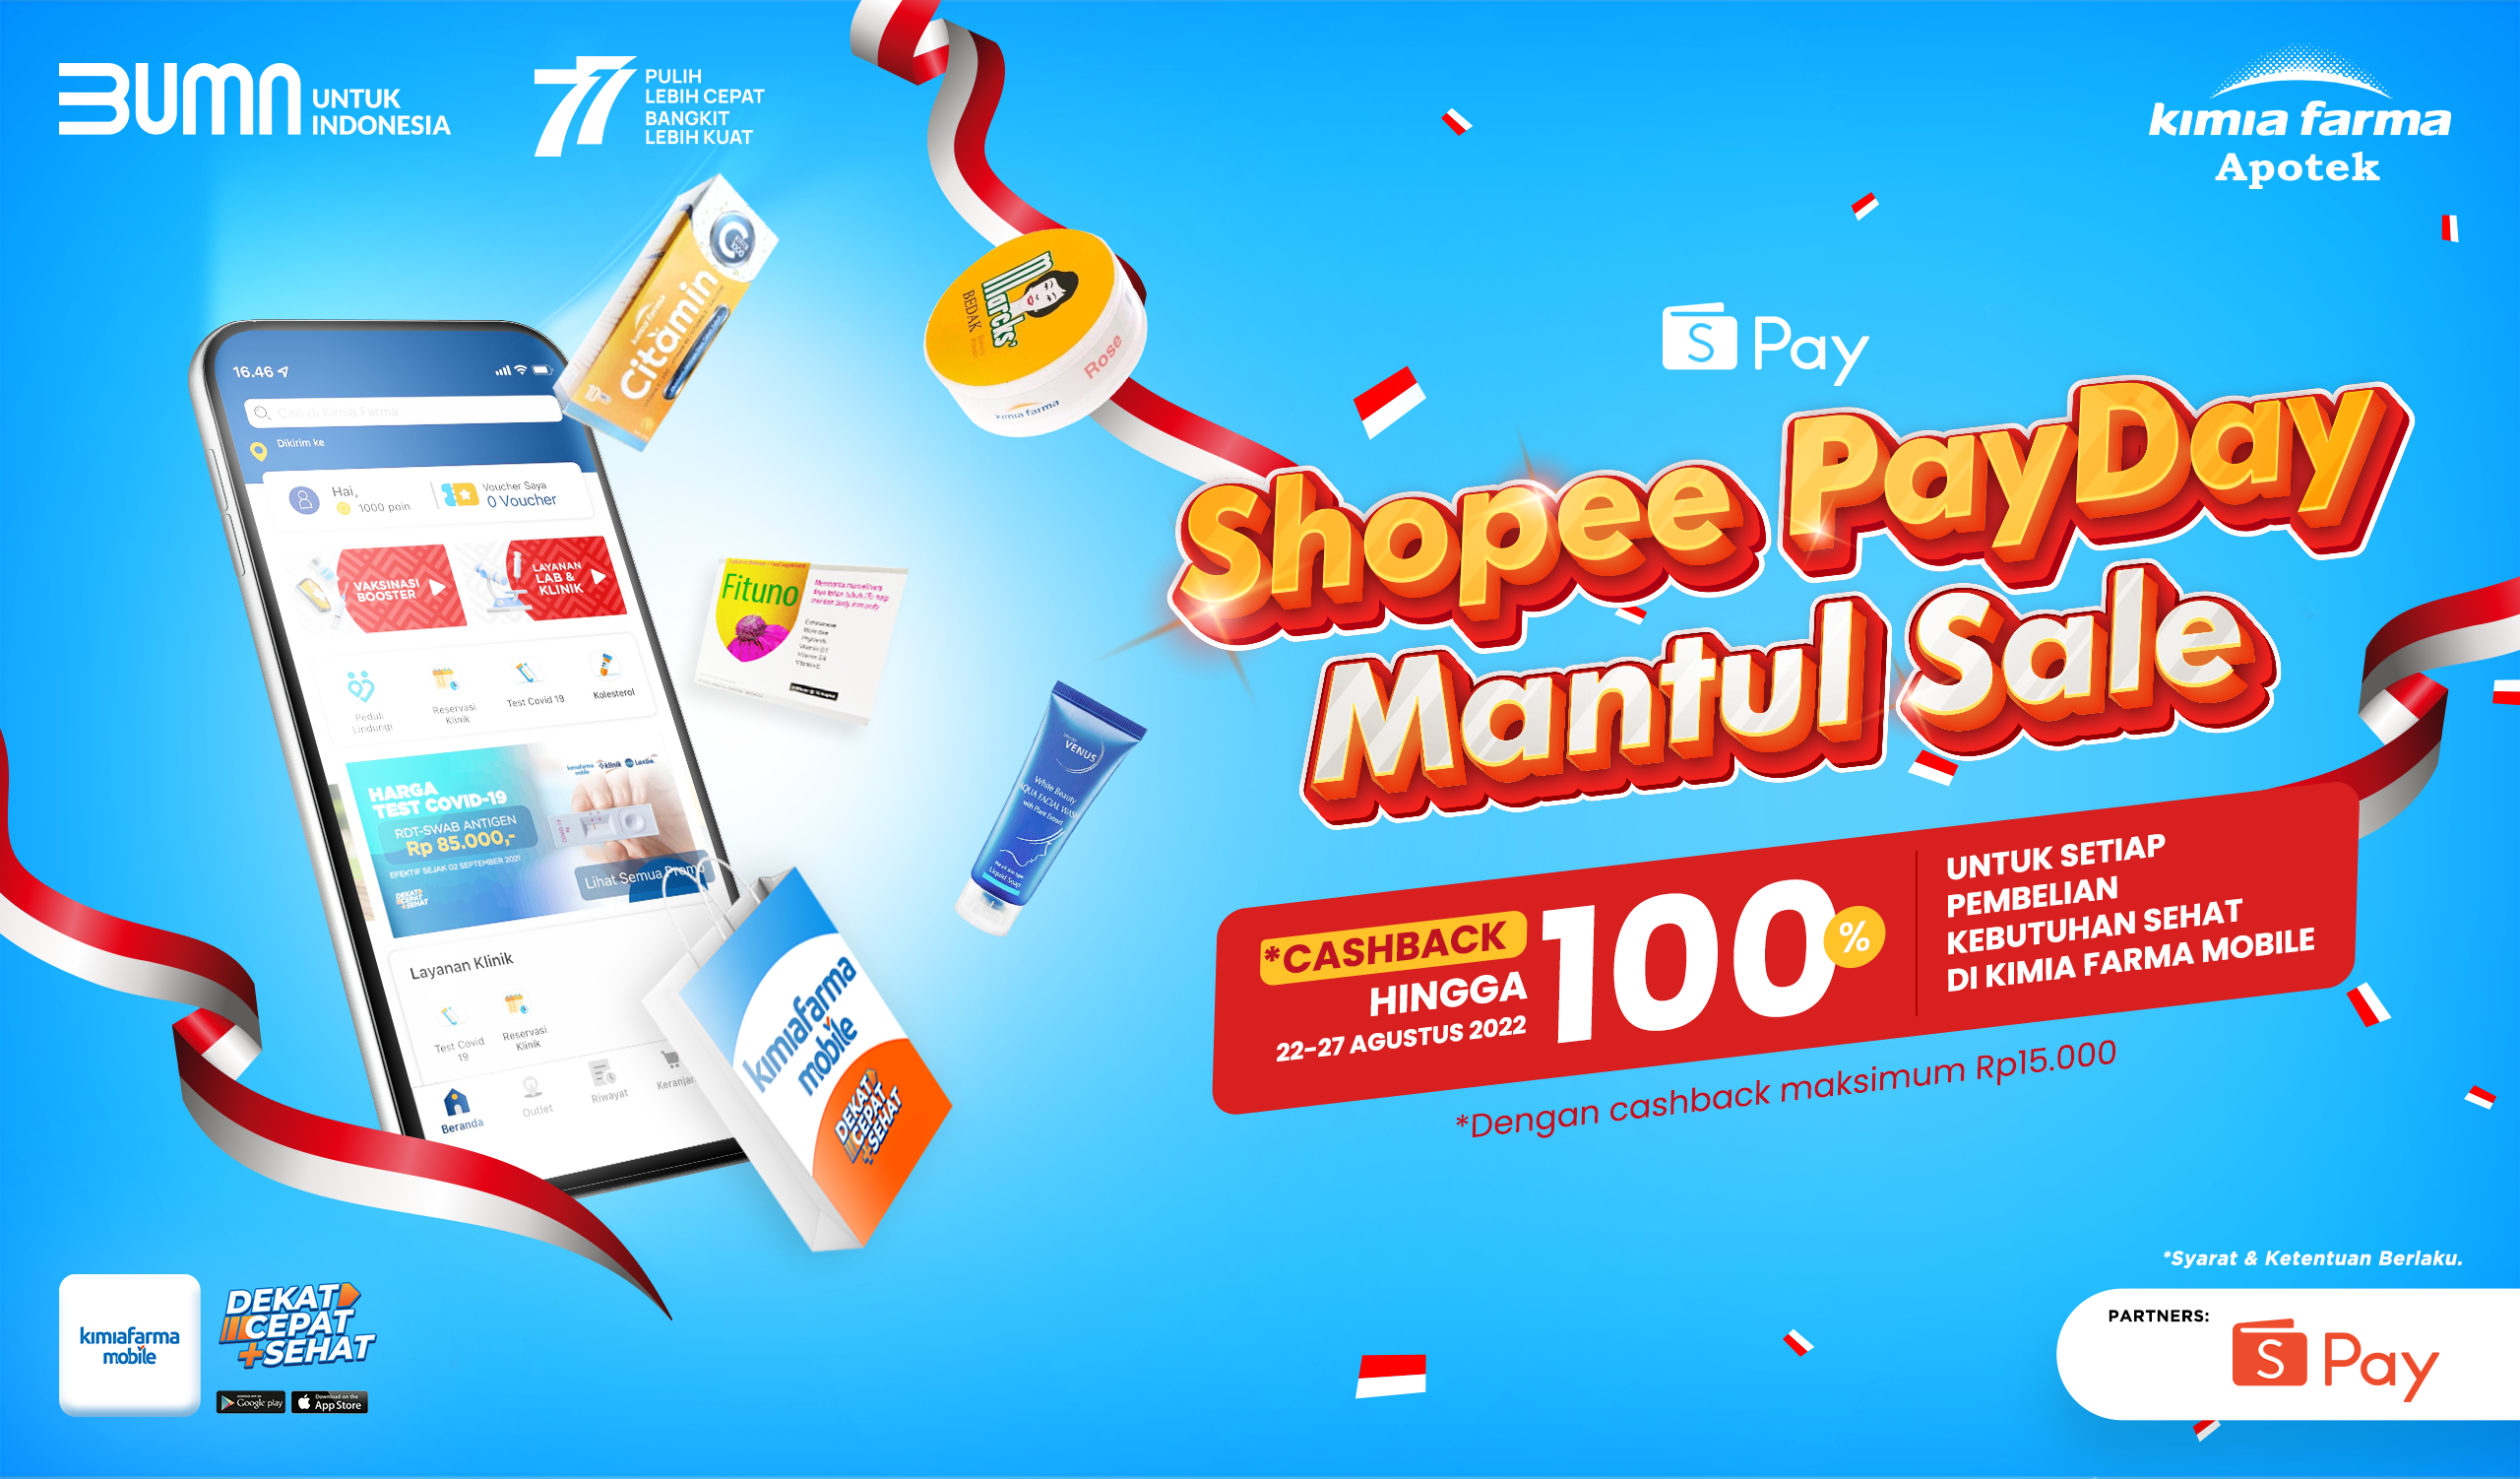 Shopee PayDay Mantul Sale